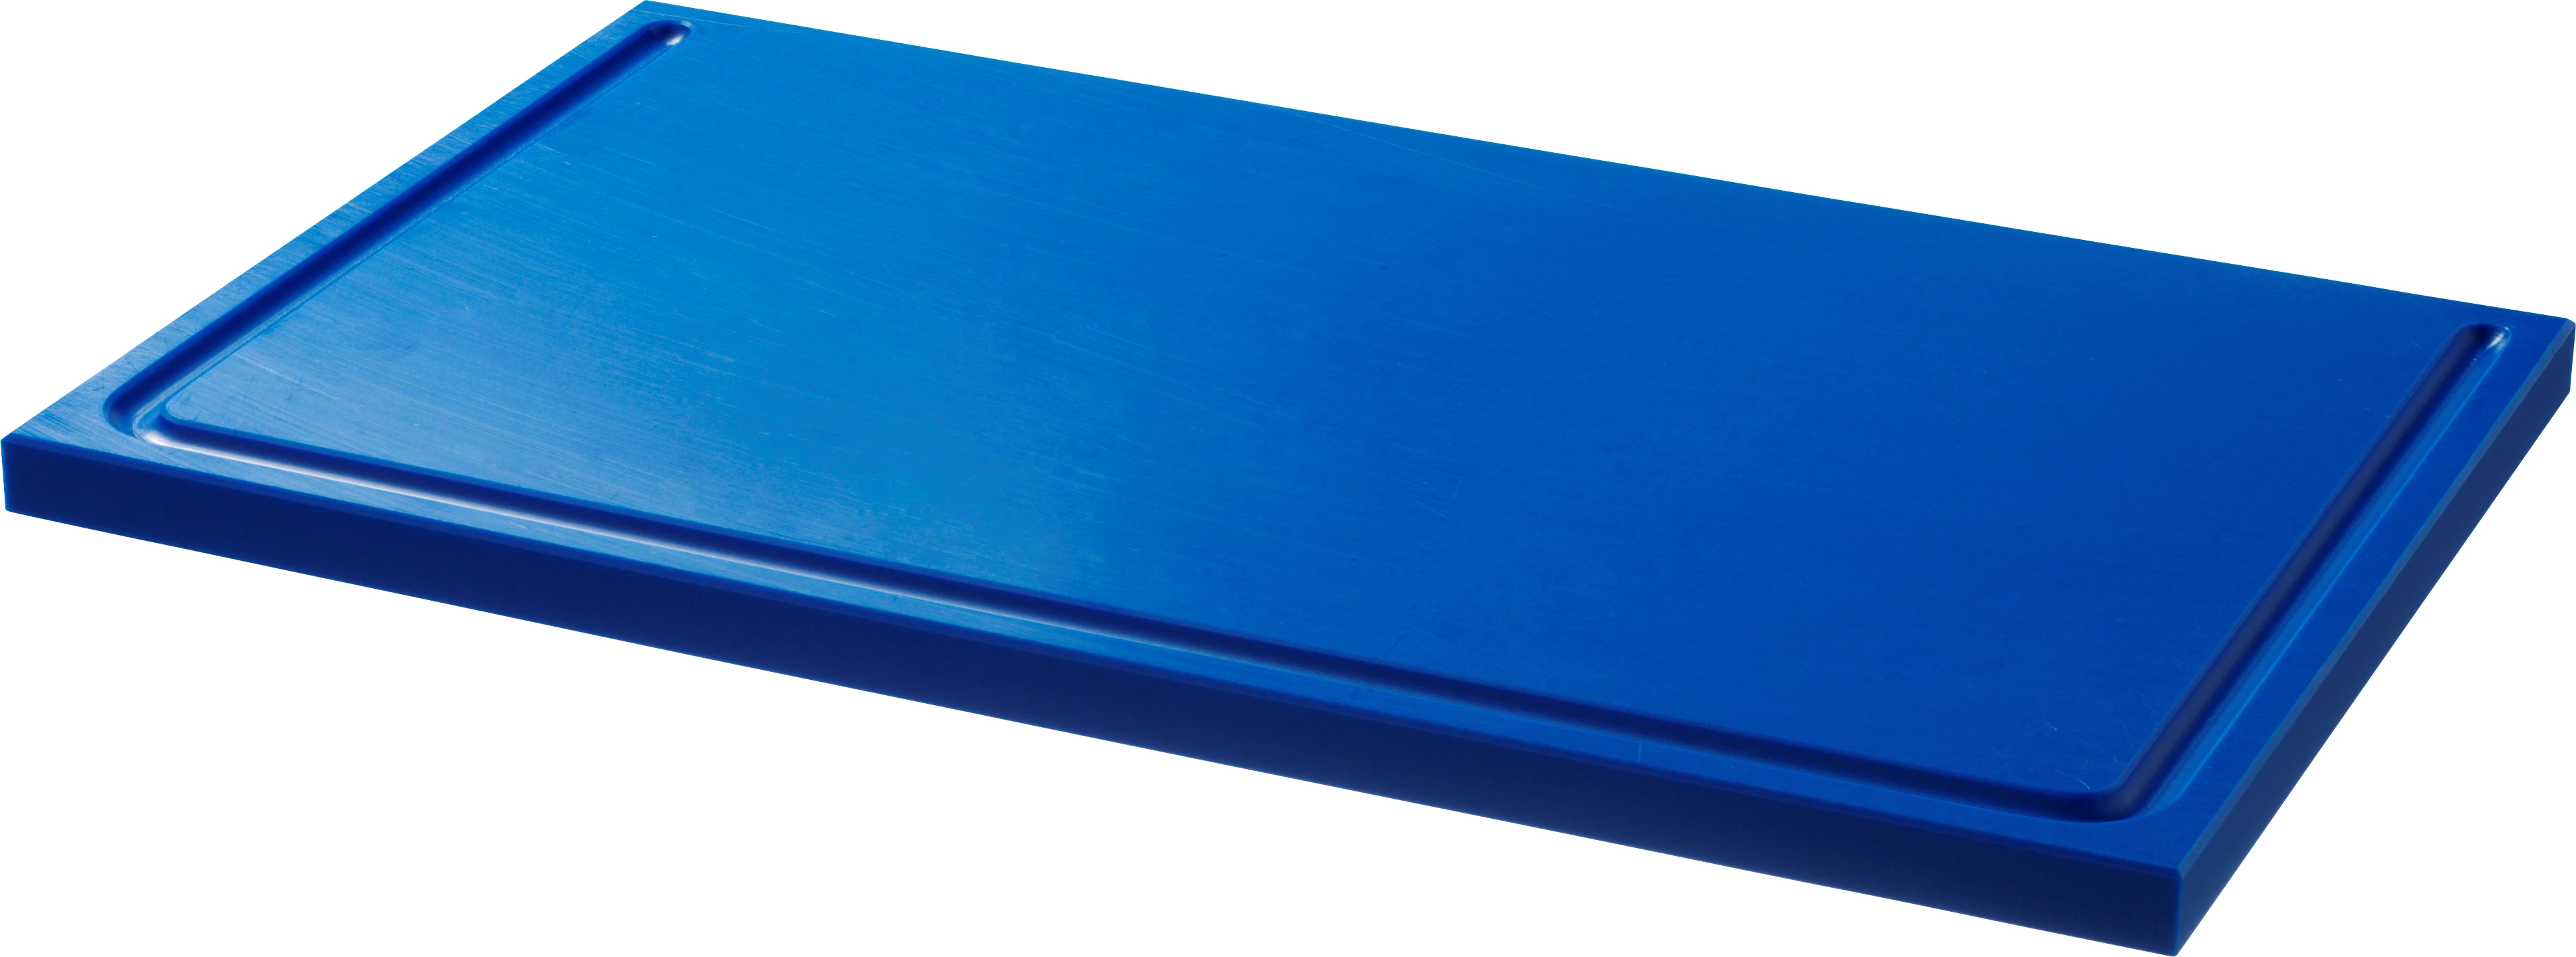 Euroboard skæreplanke, blå, 50 x 30 x 2 cm